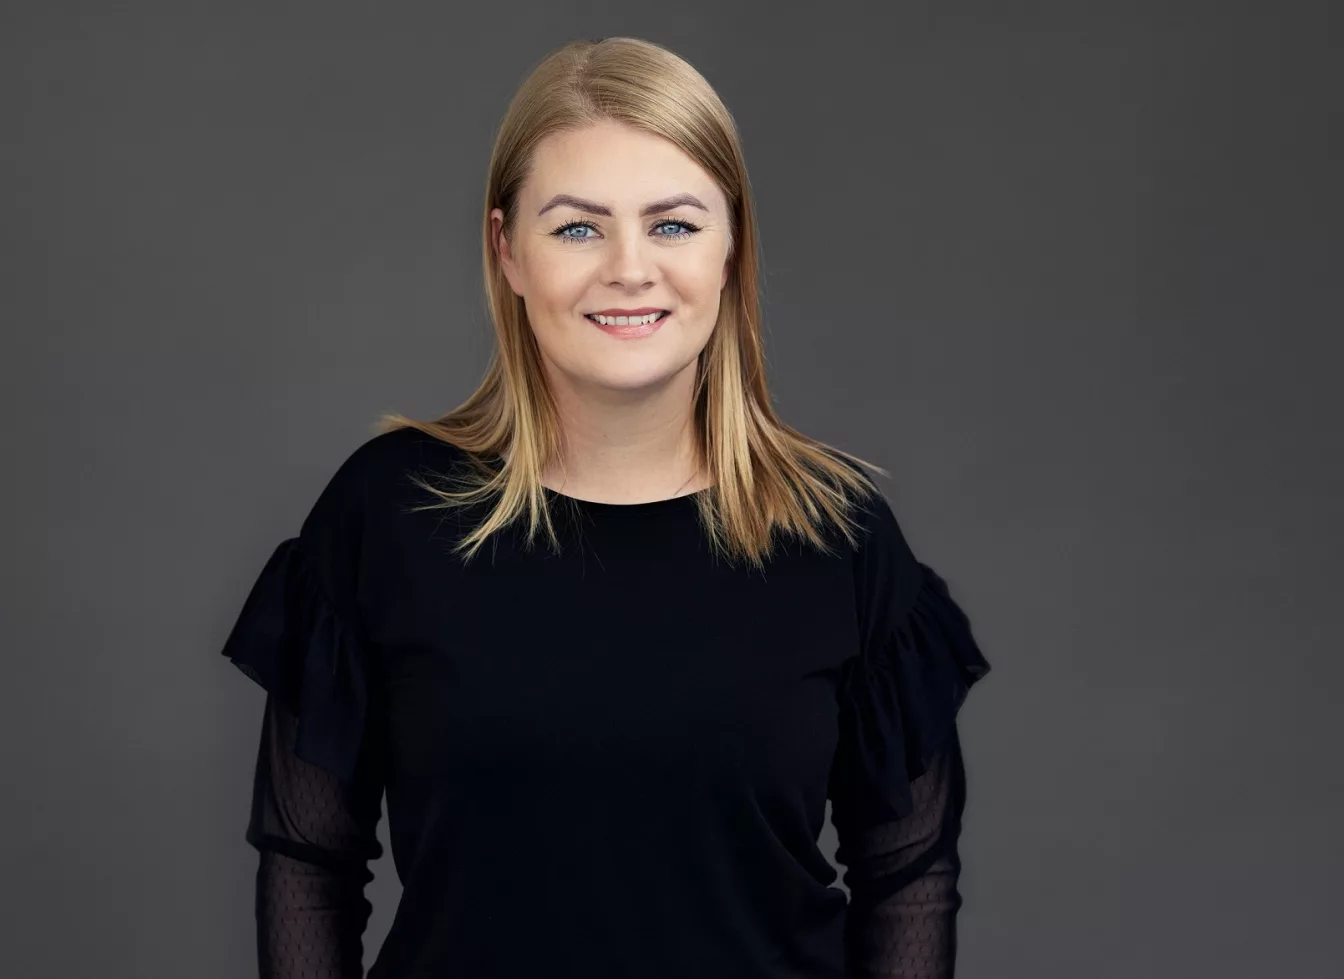 atNorth's Sustainability Manager, Ásdís Ólafsdóttir